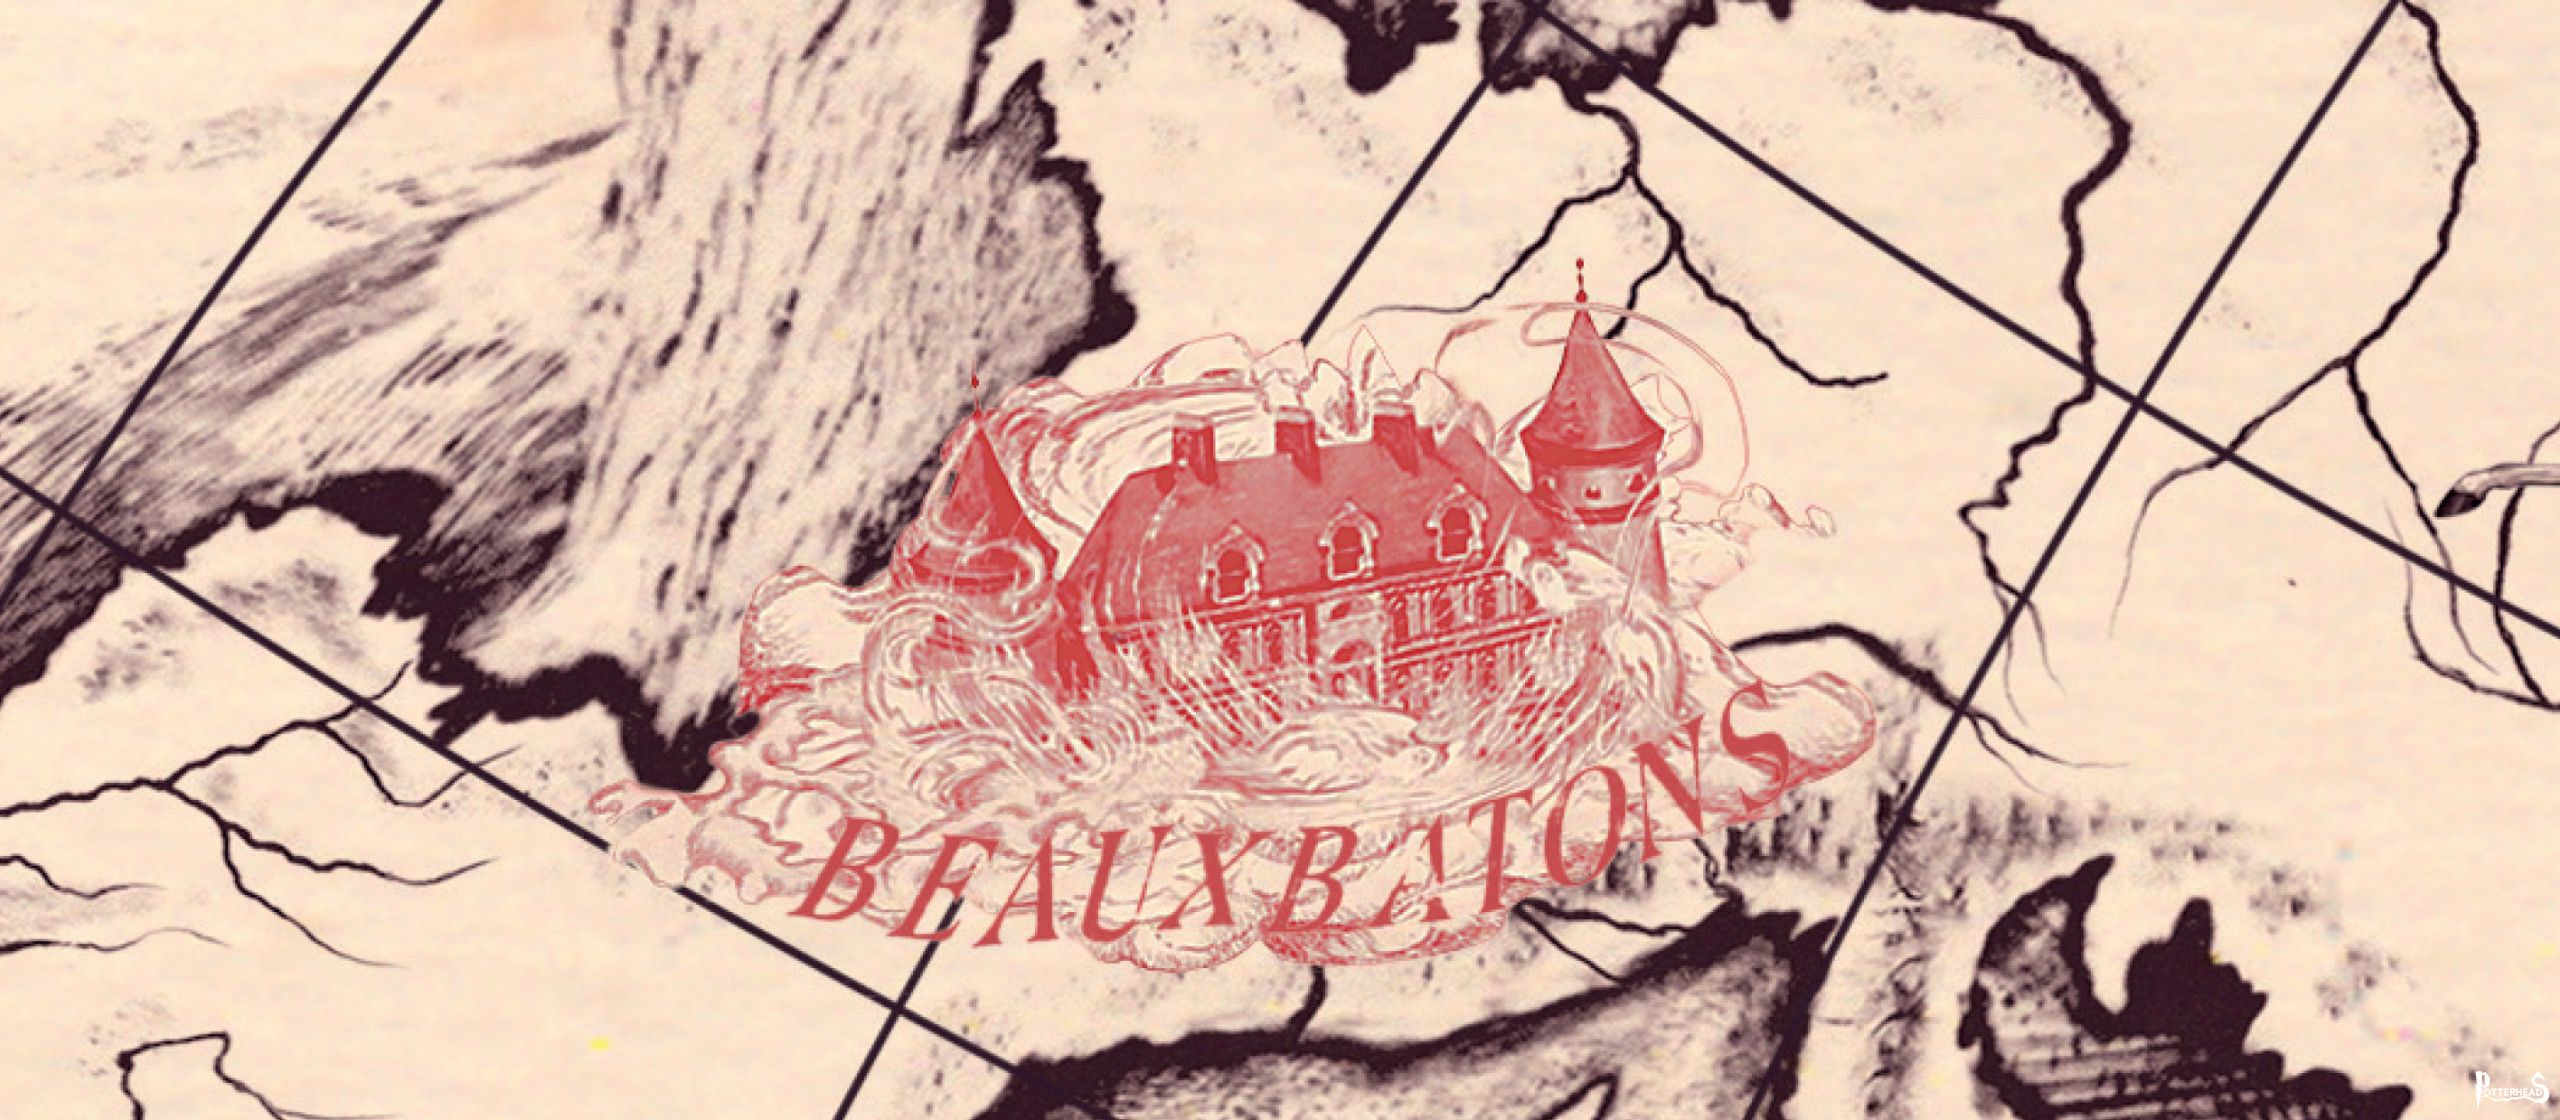 Beauxbatons Harry Potter - PotterPedia.it